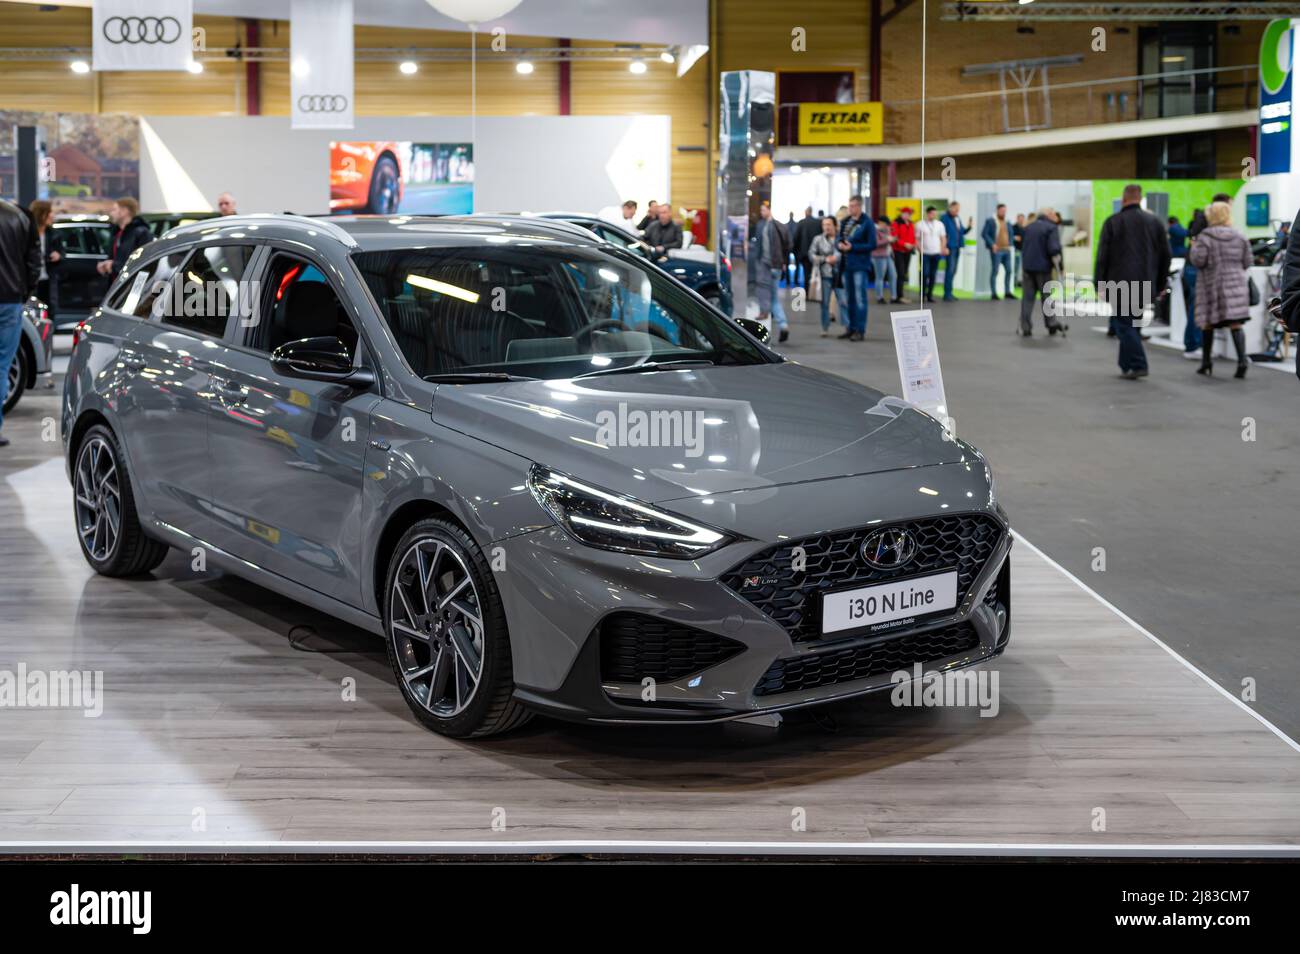 Riga, Latvia, April 29, 2022: Hyundai i30 N Line premiere at a motor show, model 2022, front view Stock Photo